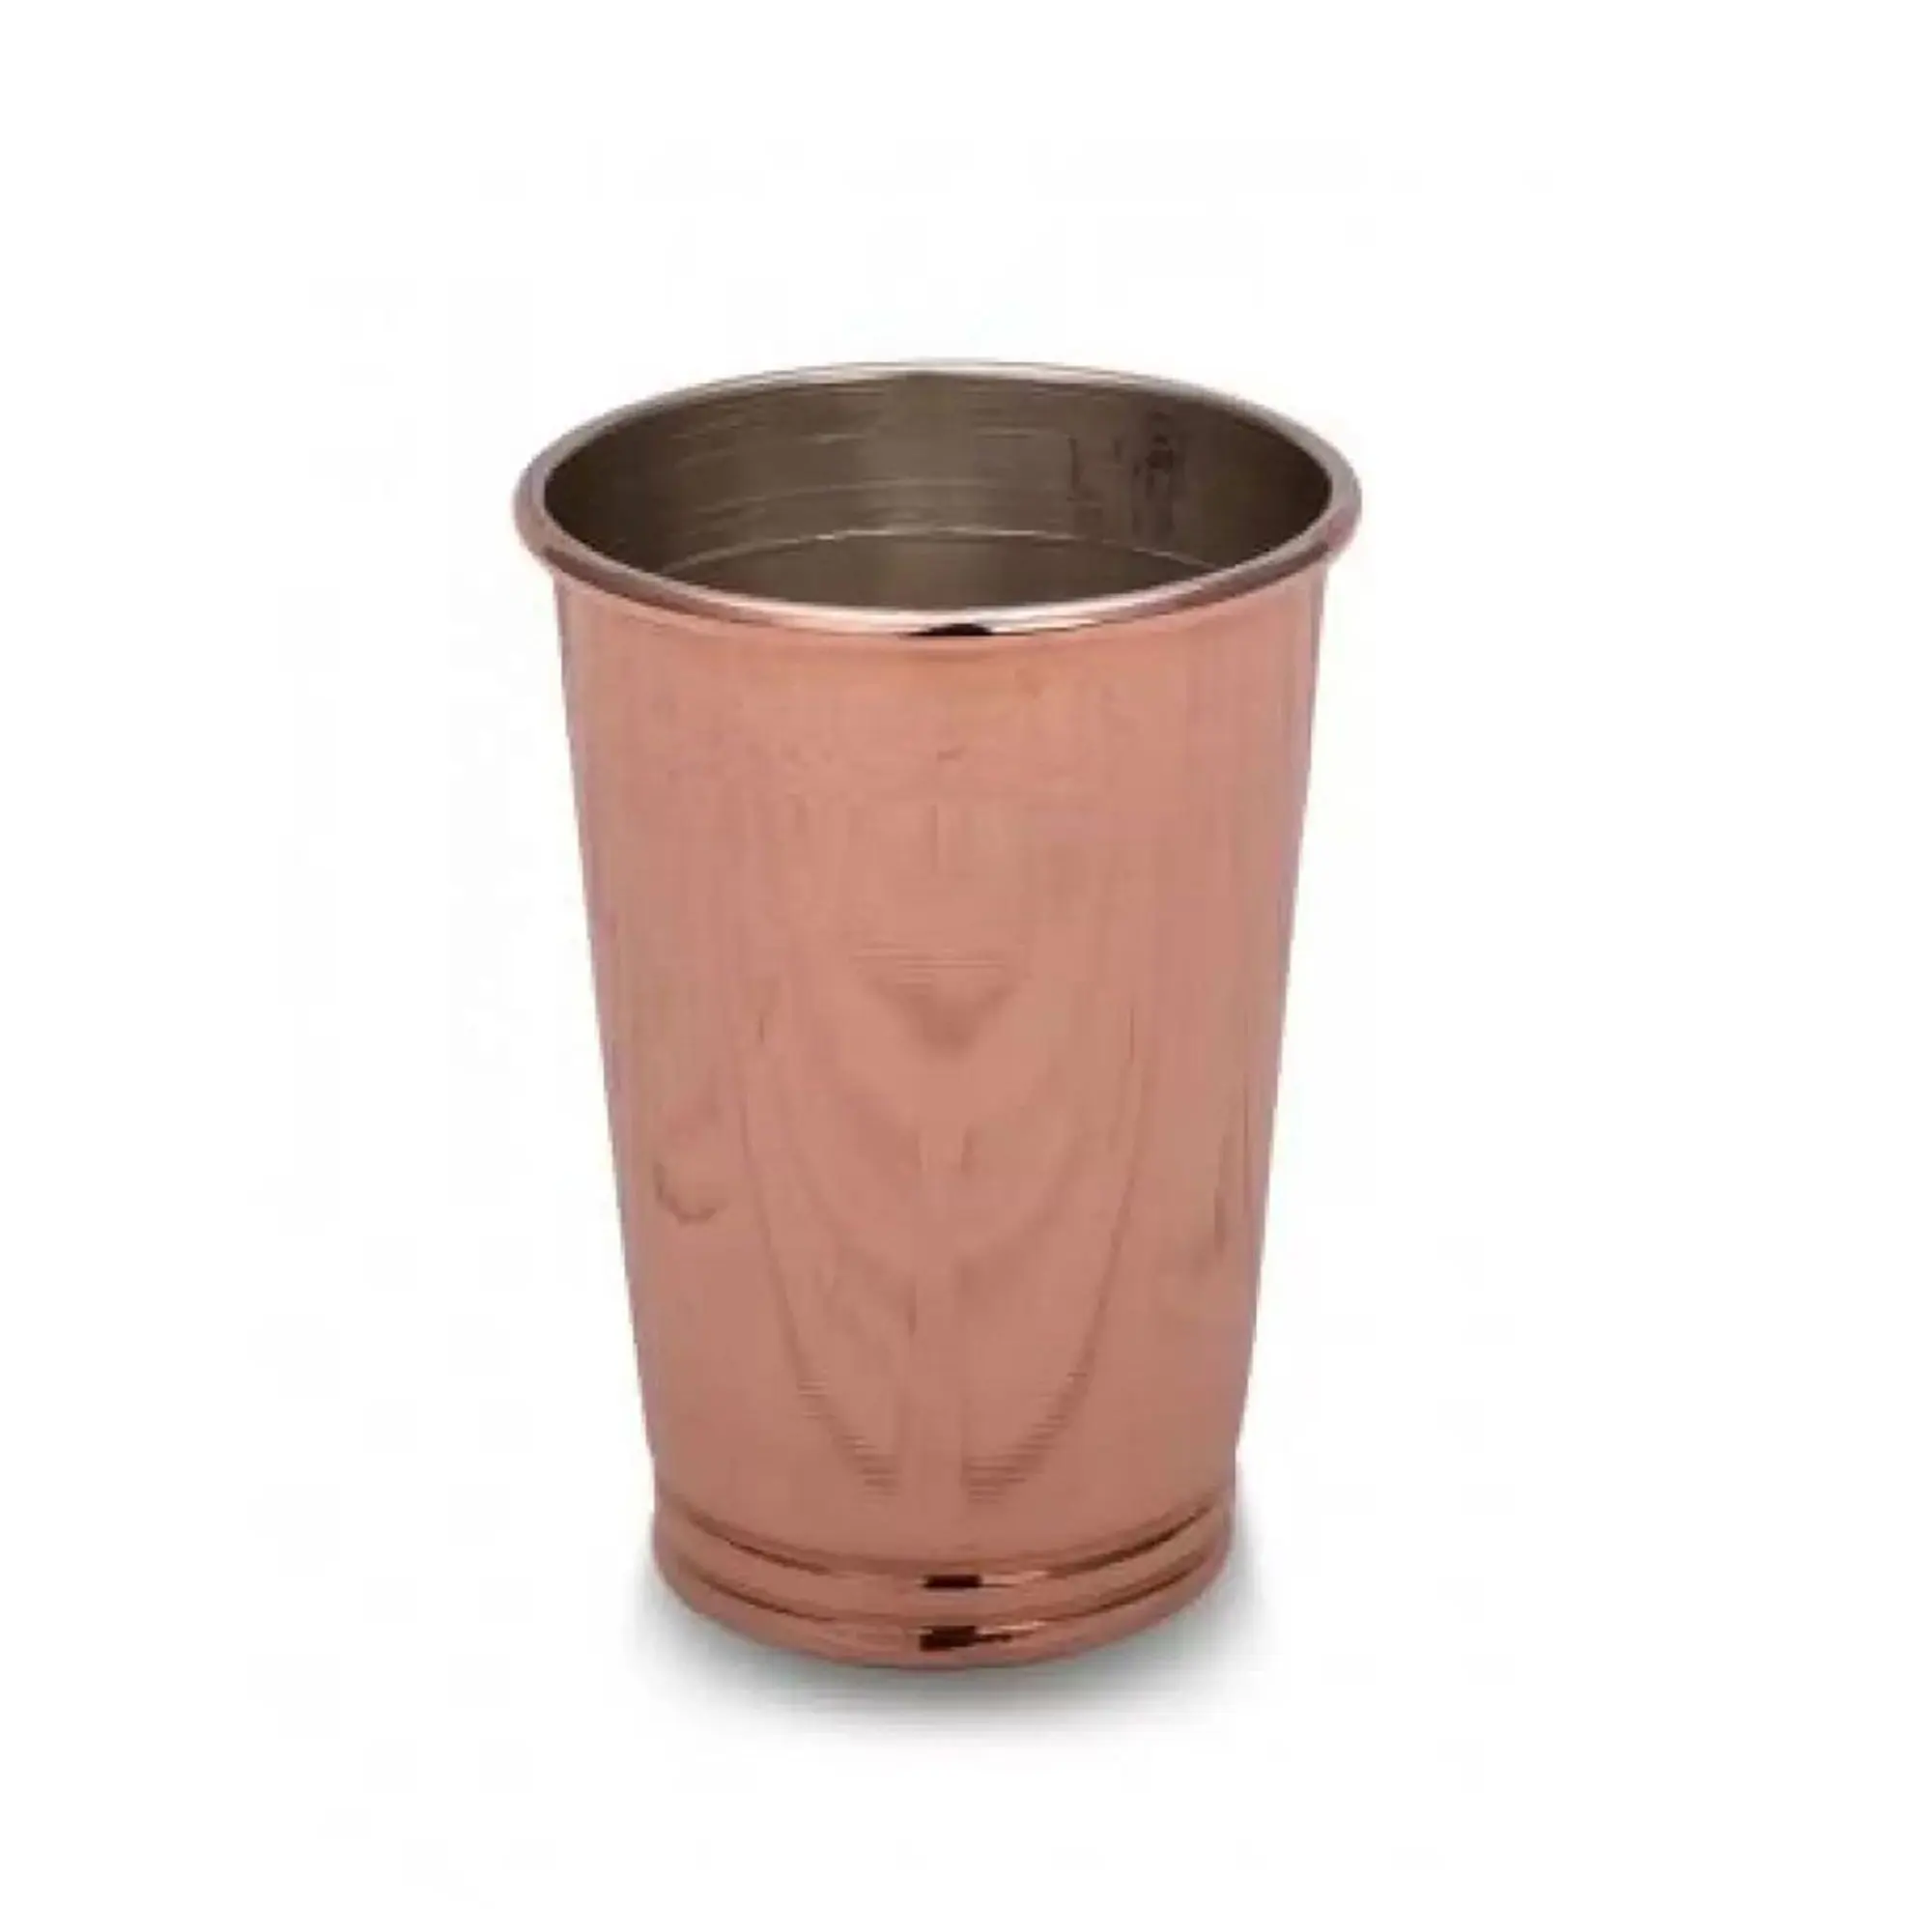 Verona Handmade Hammered Copper Glass, Ayran, Water, Coffee, Tes, Beverage Mug 420ml COPPER Color, Traditional Design